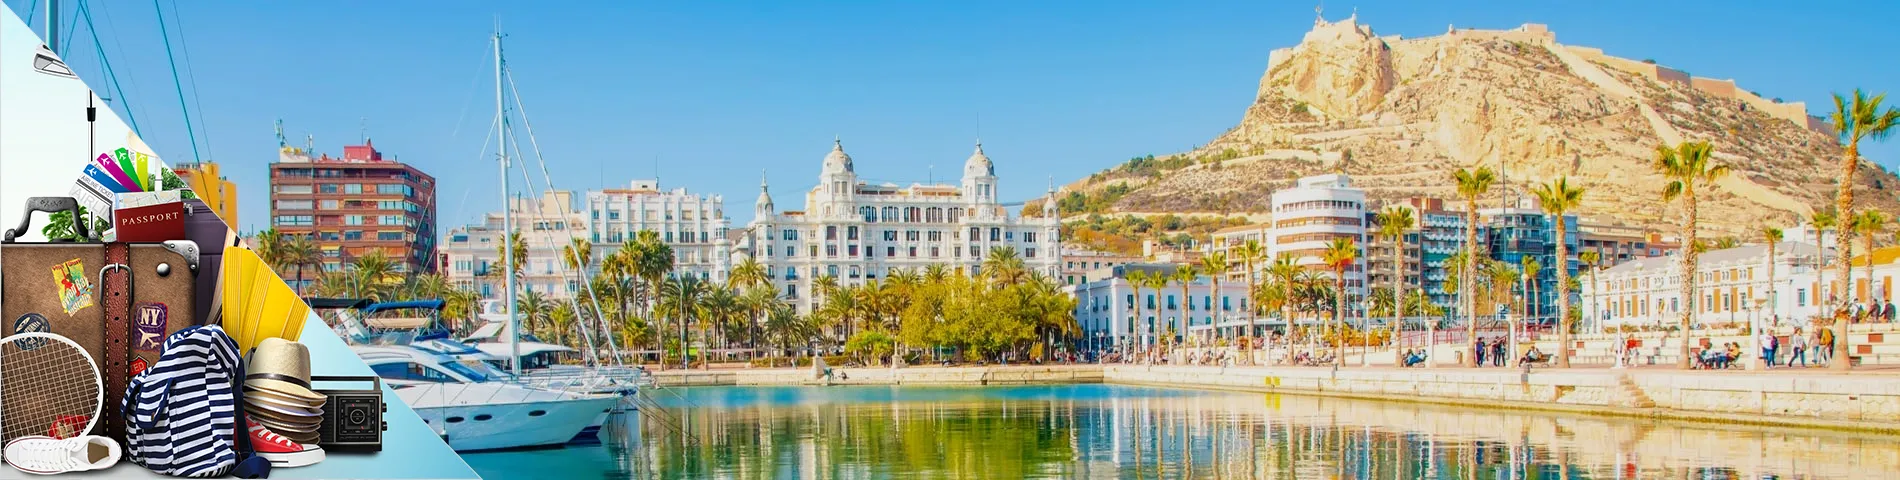 Alacant - Espanyol per al Turisme